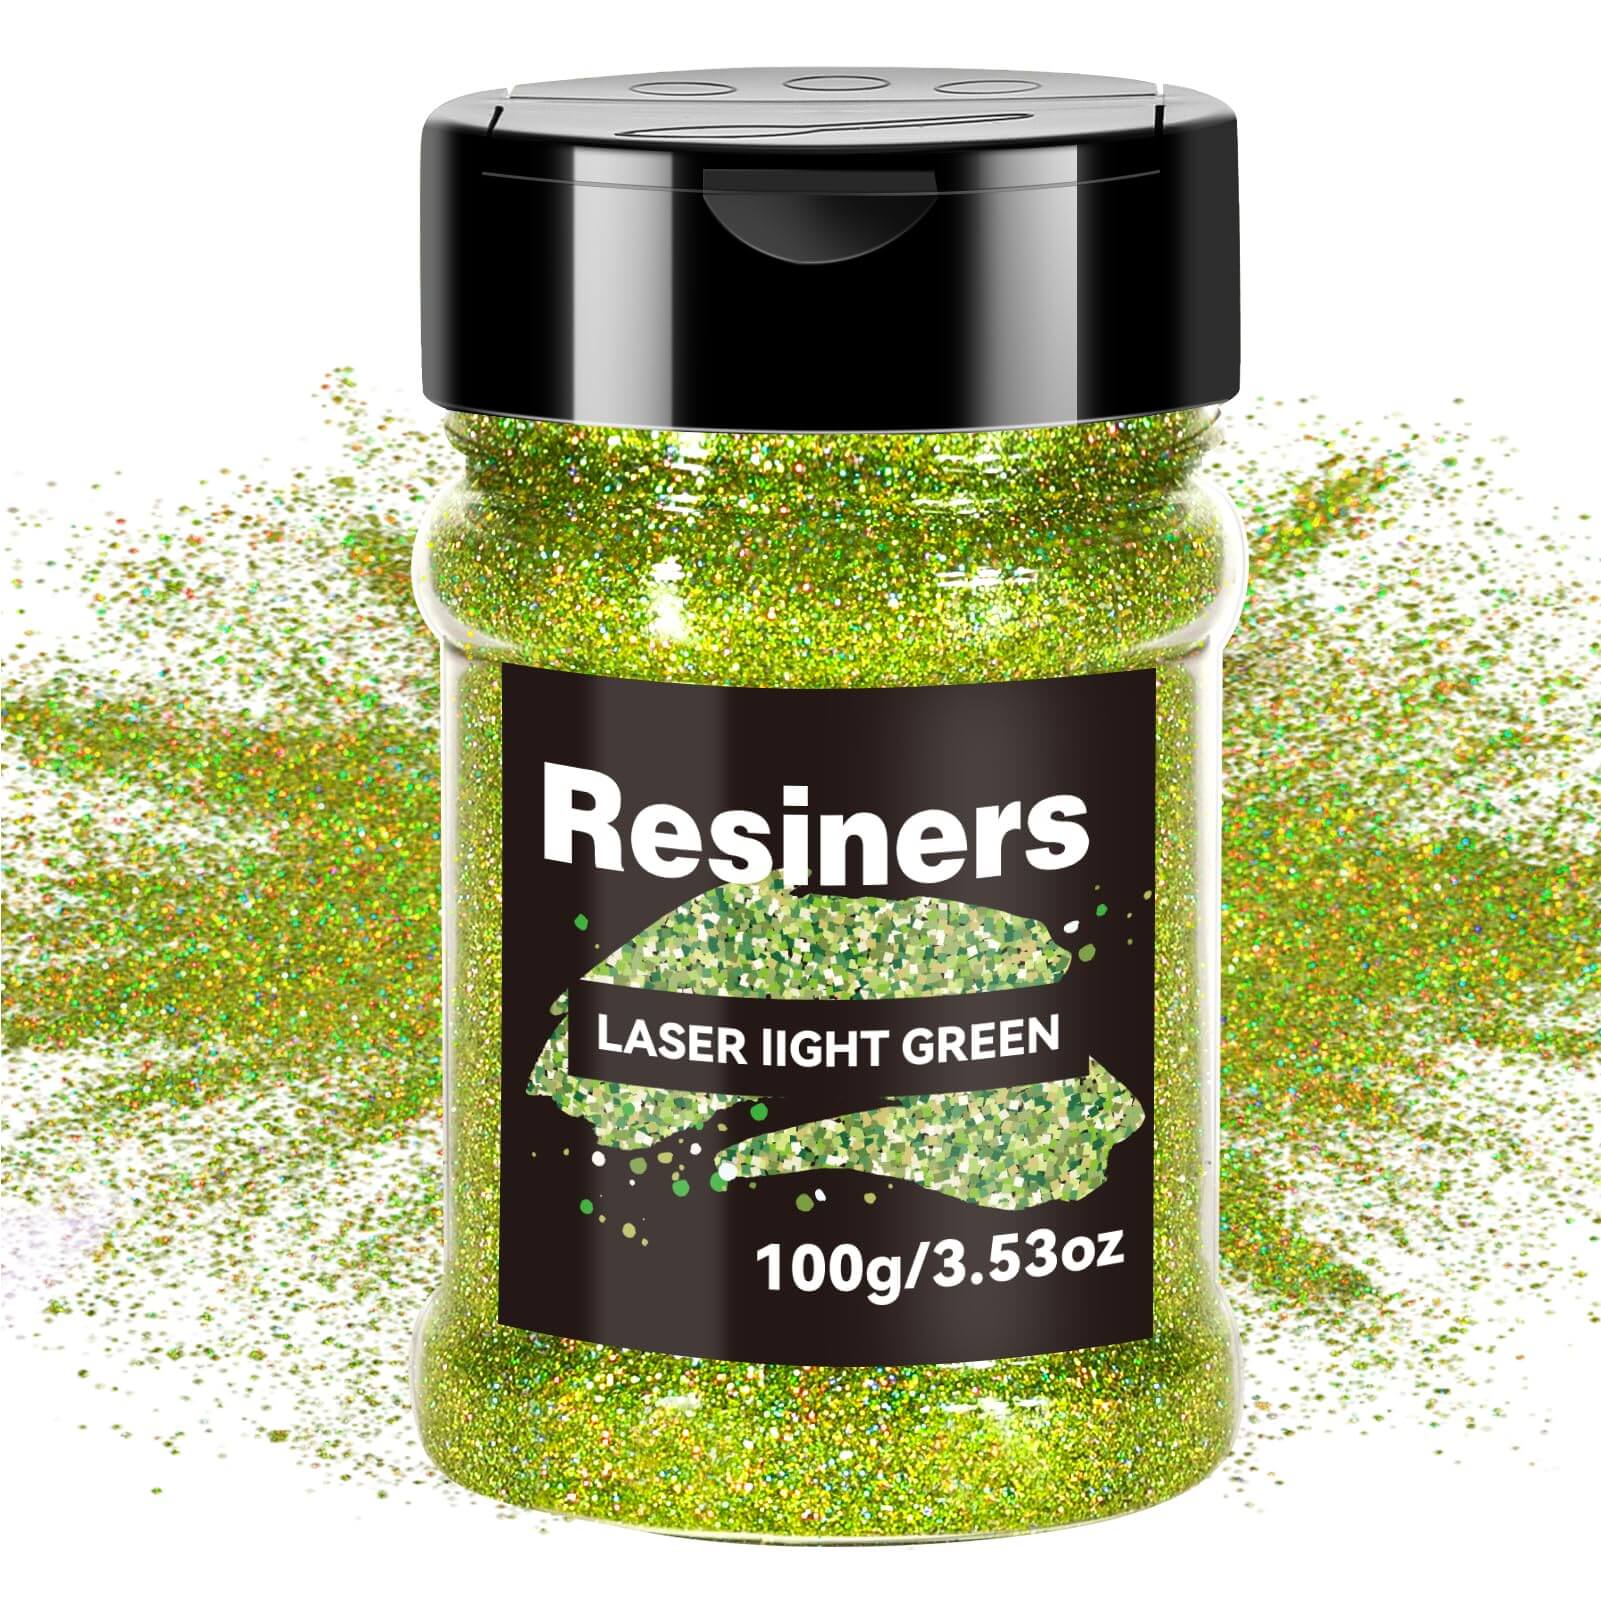 Ultra Fine Glitter Powder (Green) 15g